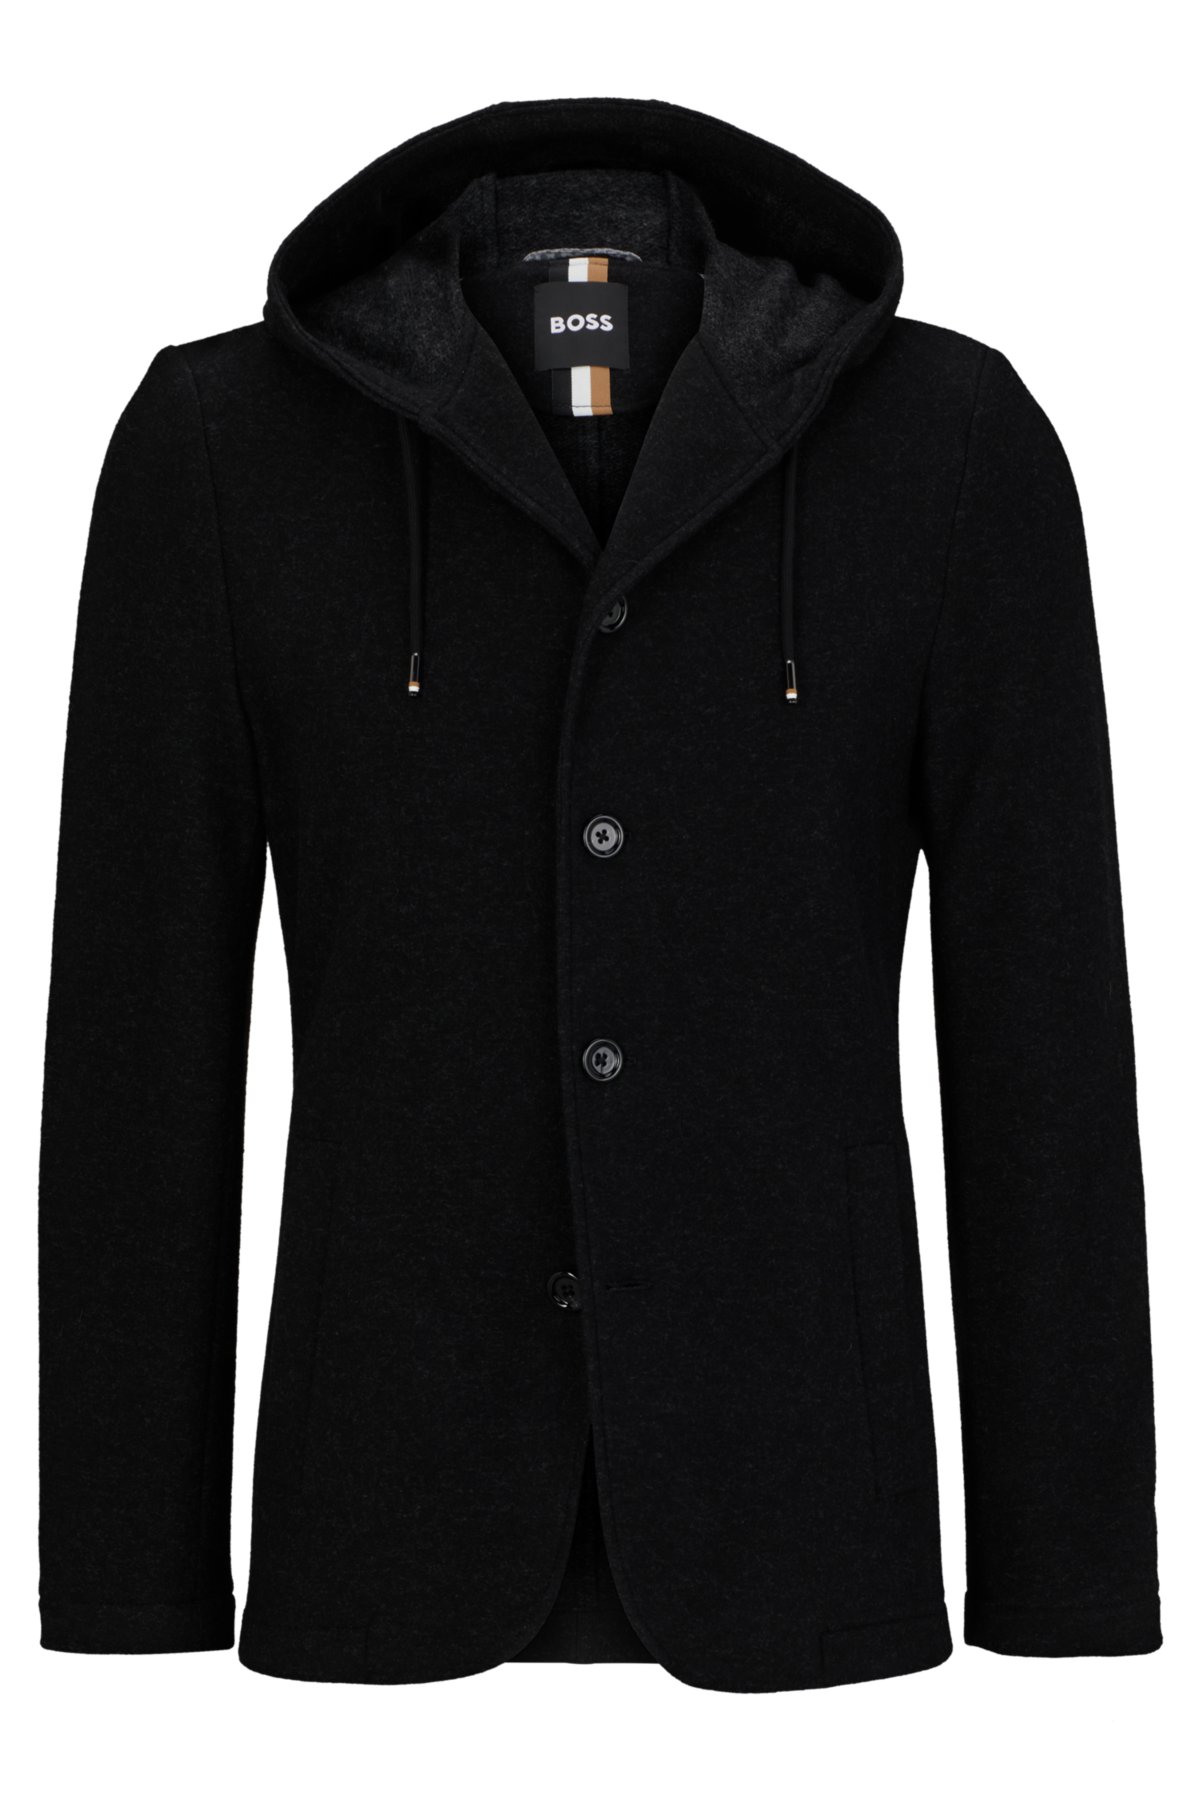 BOSS - Hooded slim-fit jacket in a melange wool blend